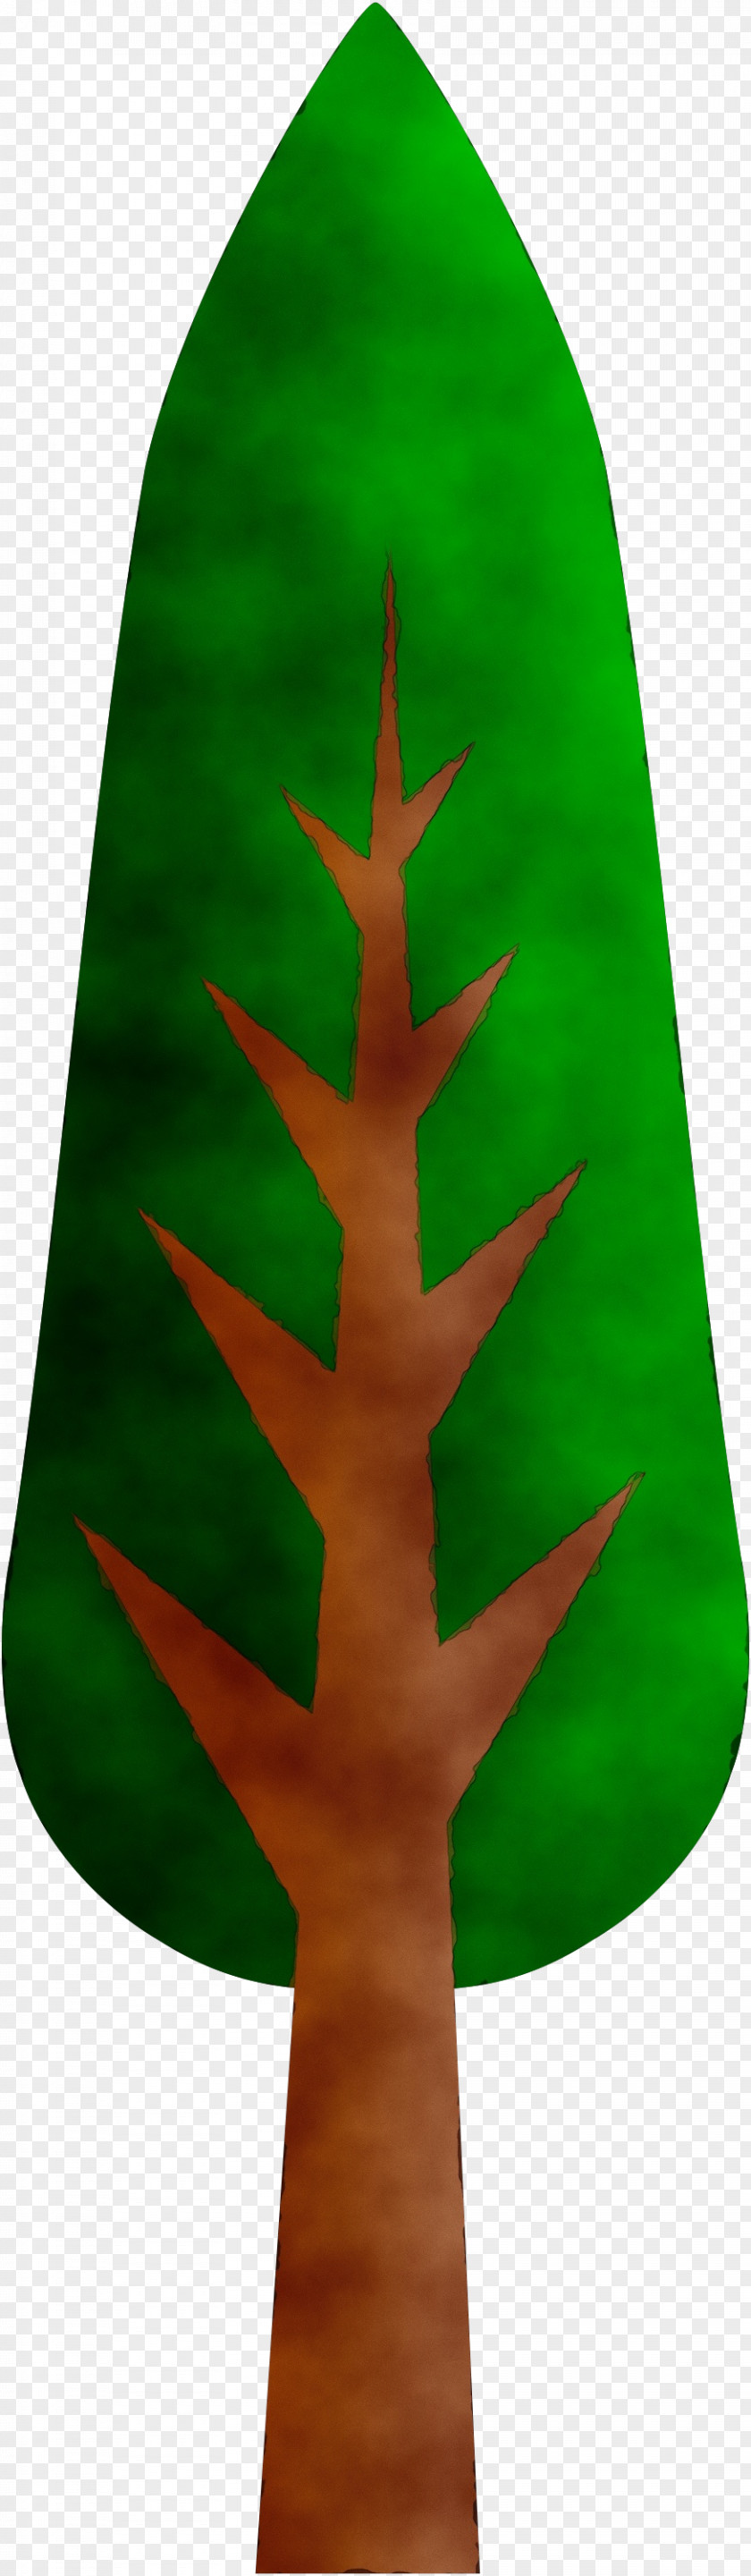 Plant Tree Green Leaf PNG